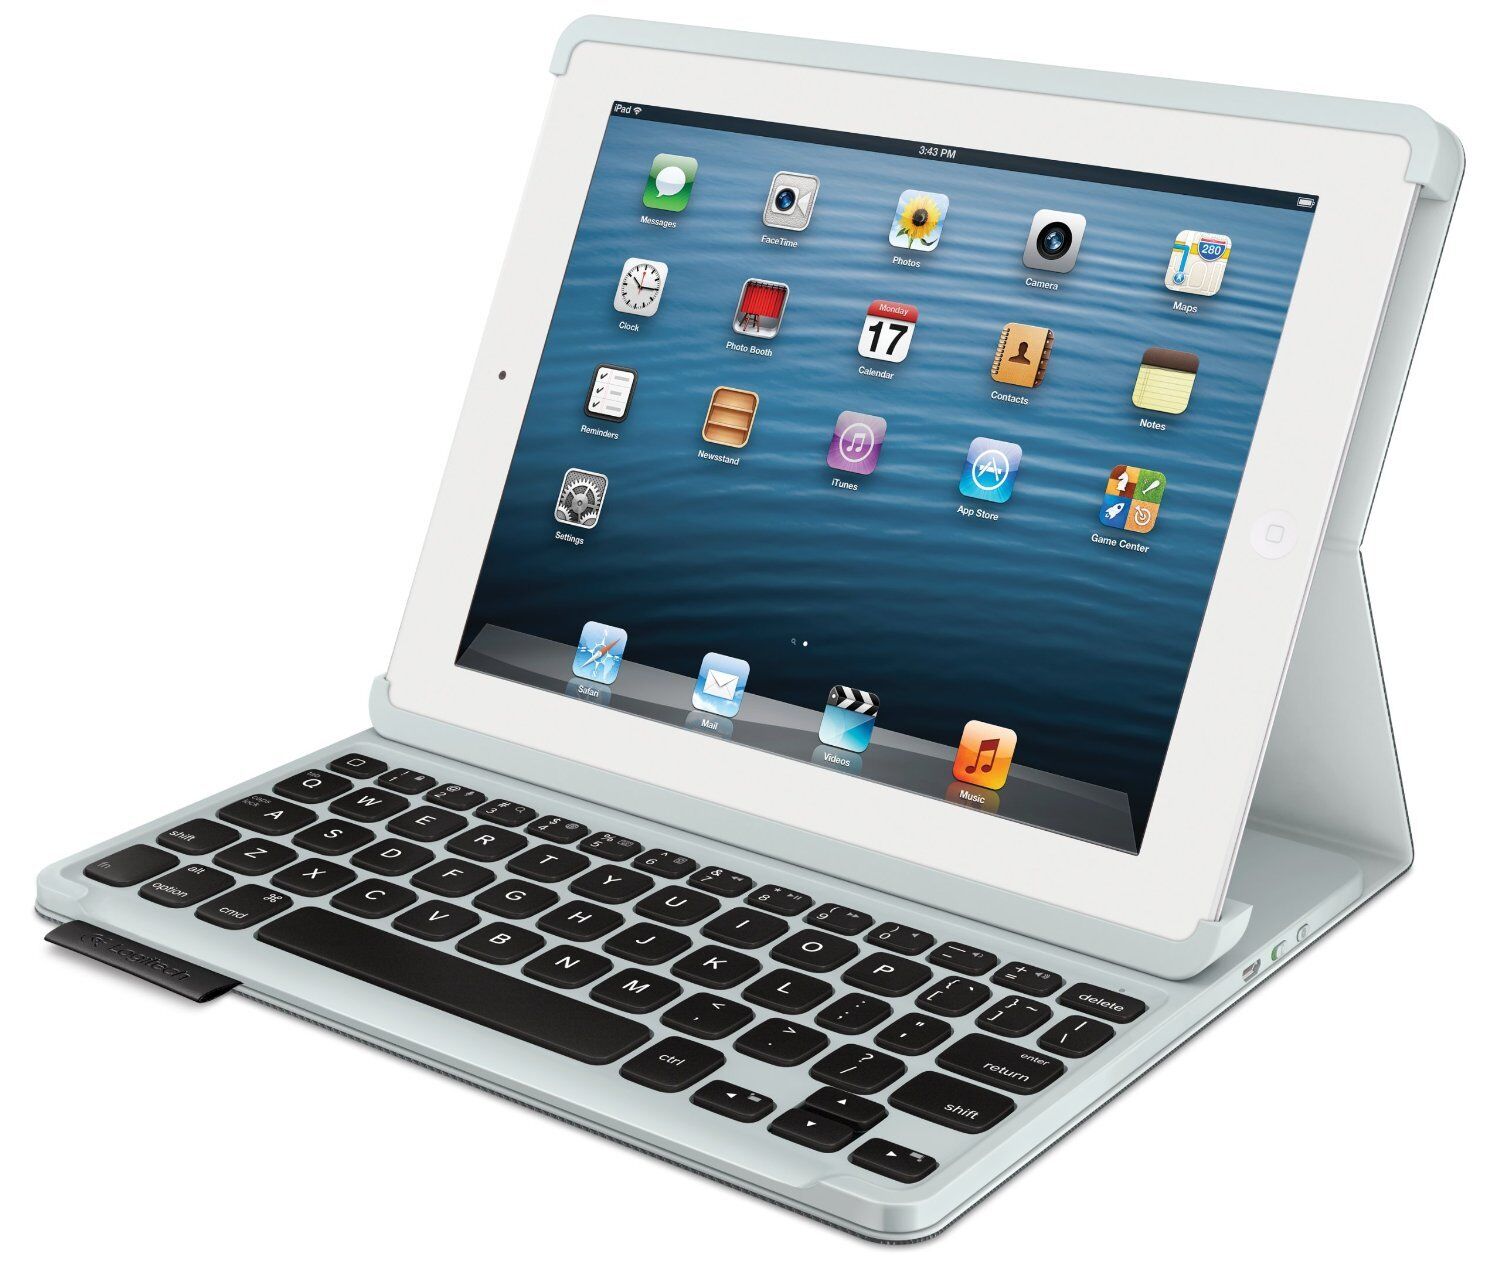 NEW Logitech Keyboard Folio Wireless Case for Ipad 2, 3 & 4 Generation - Black